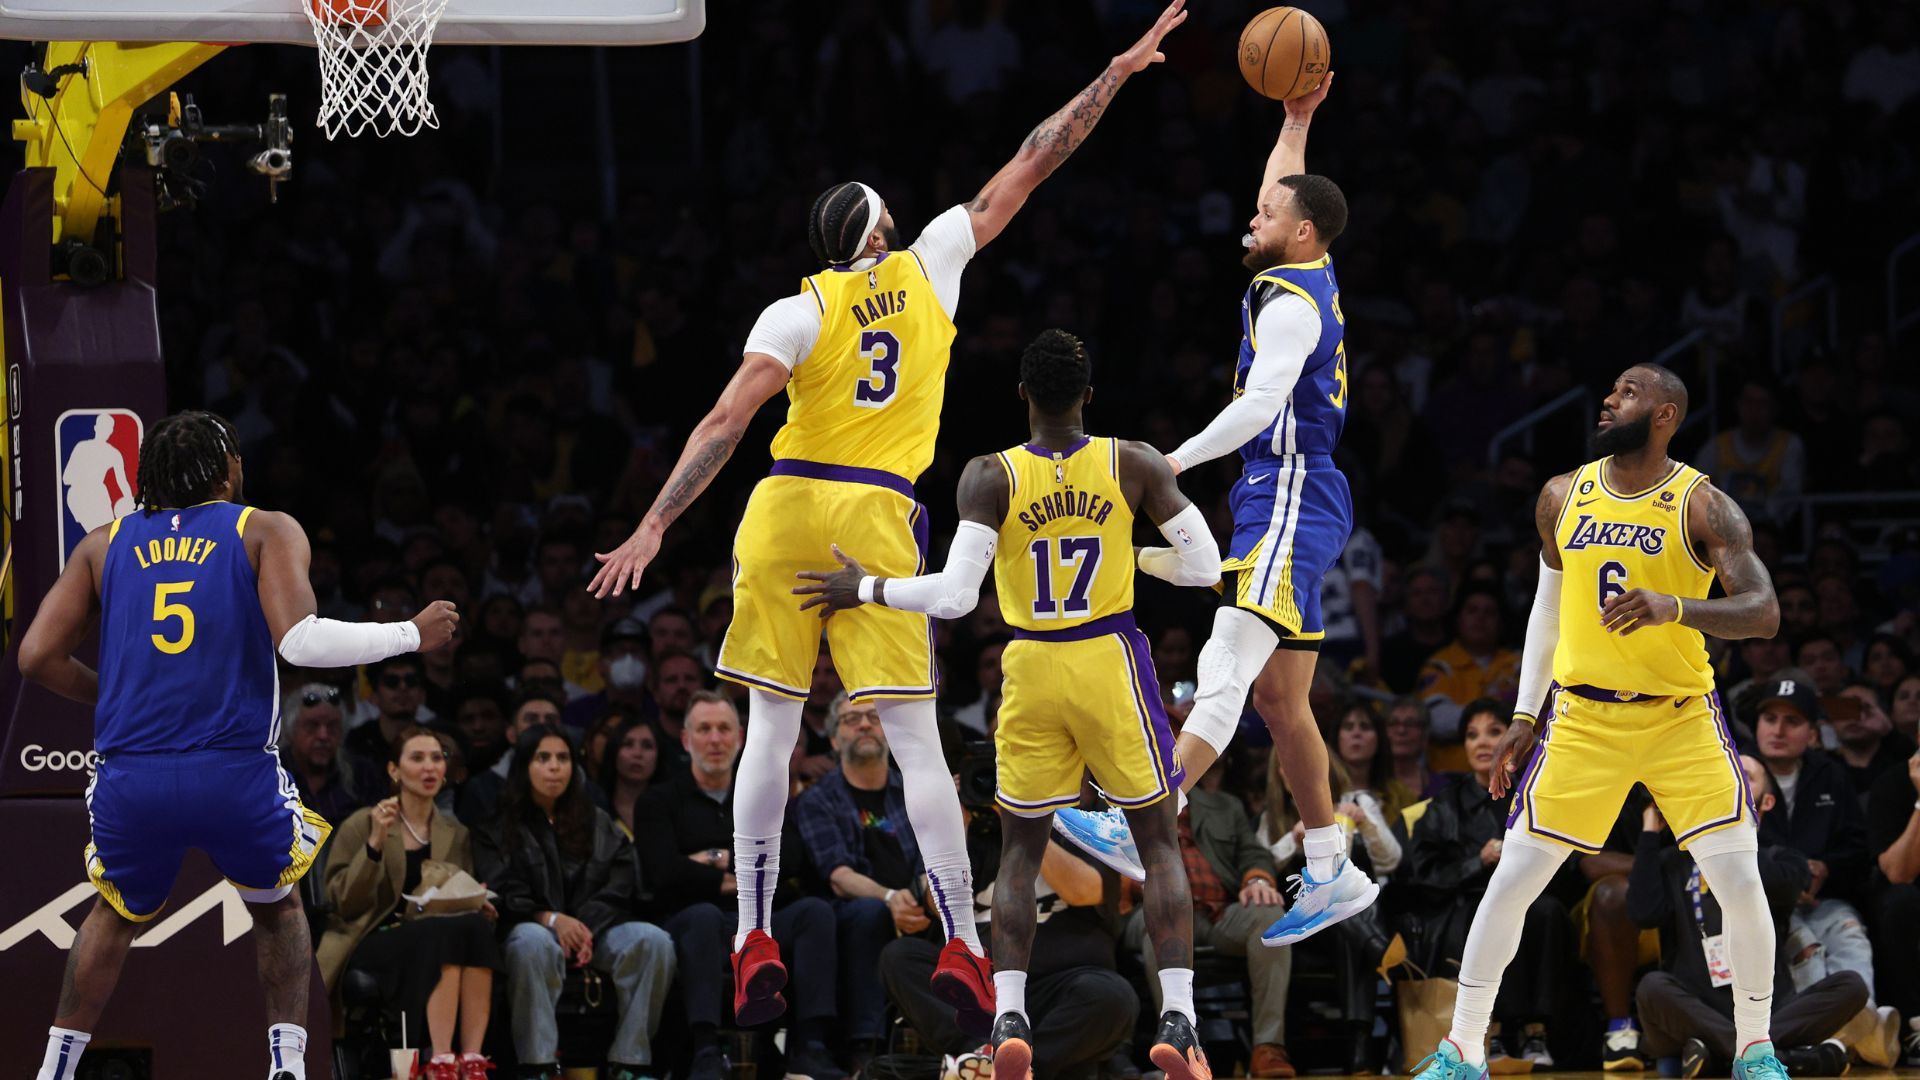 NBA AO VIVO - Los Angeles Lakers detonam Miami Heat no jogo 1 da